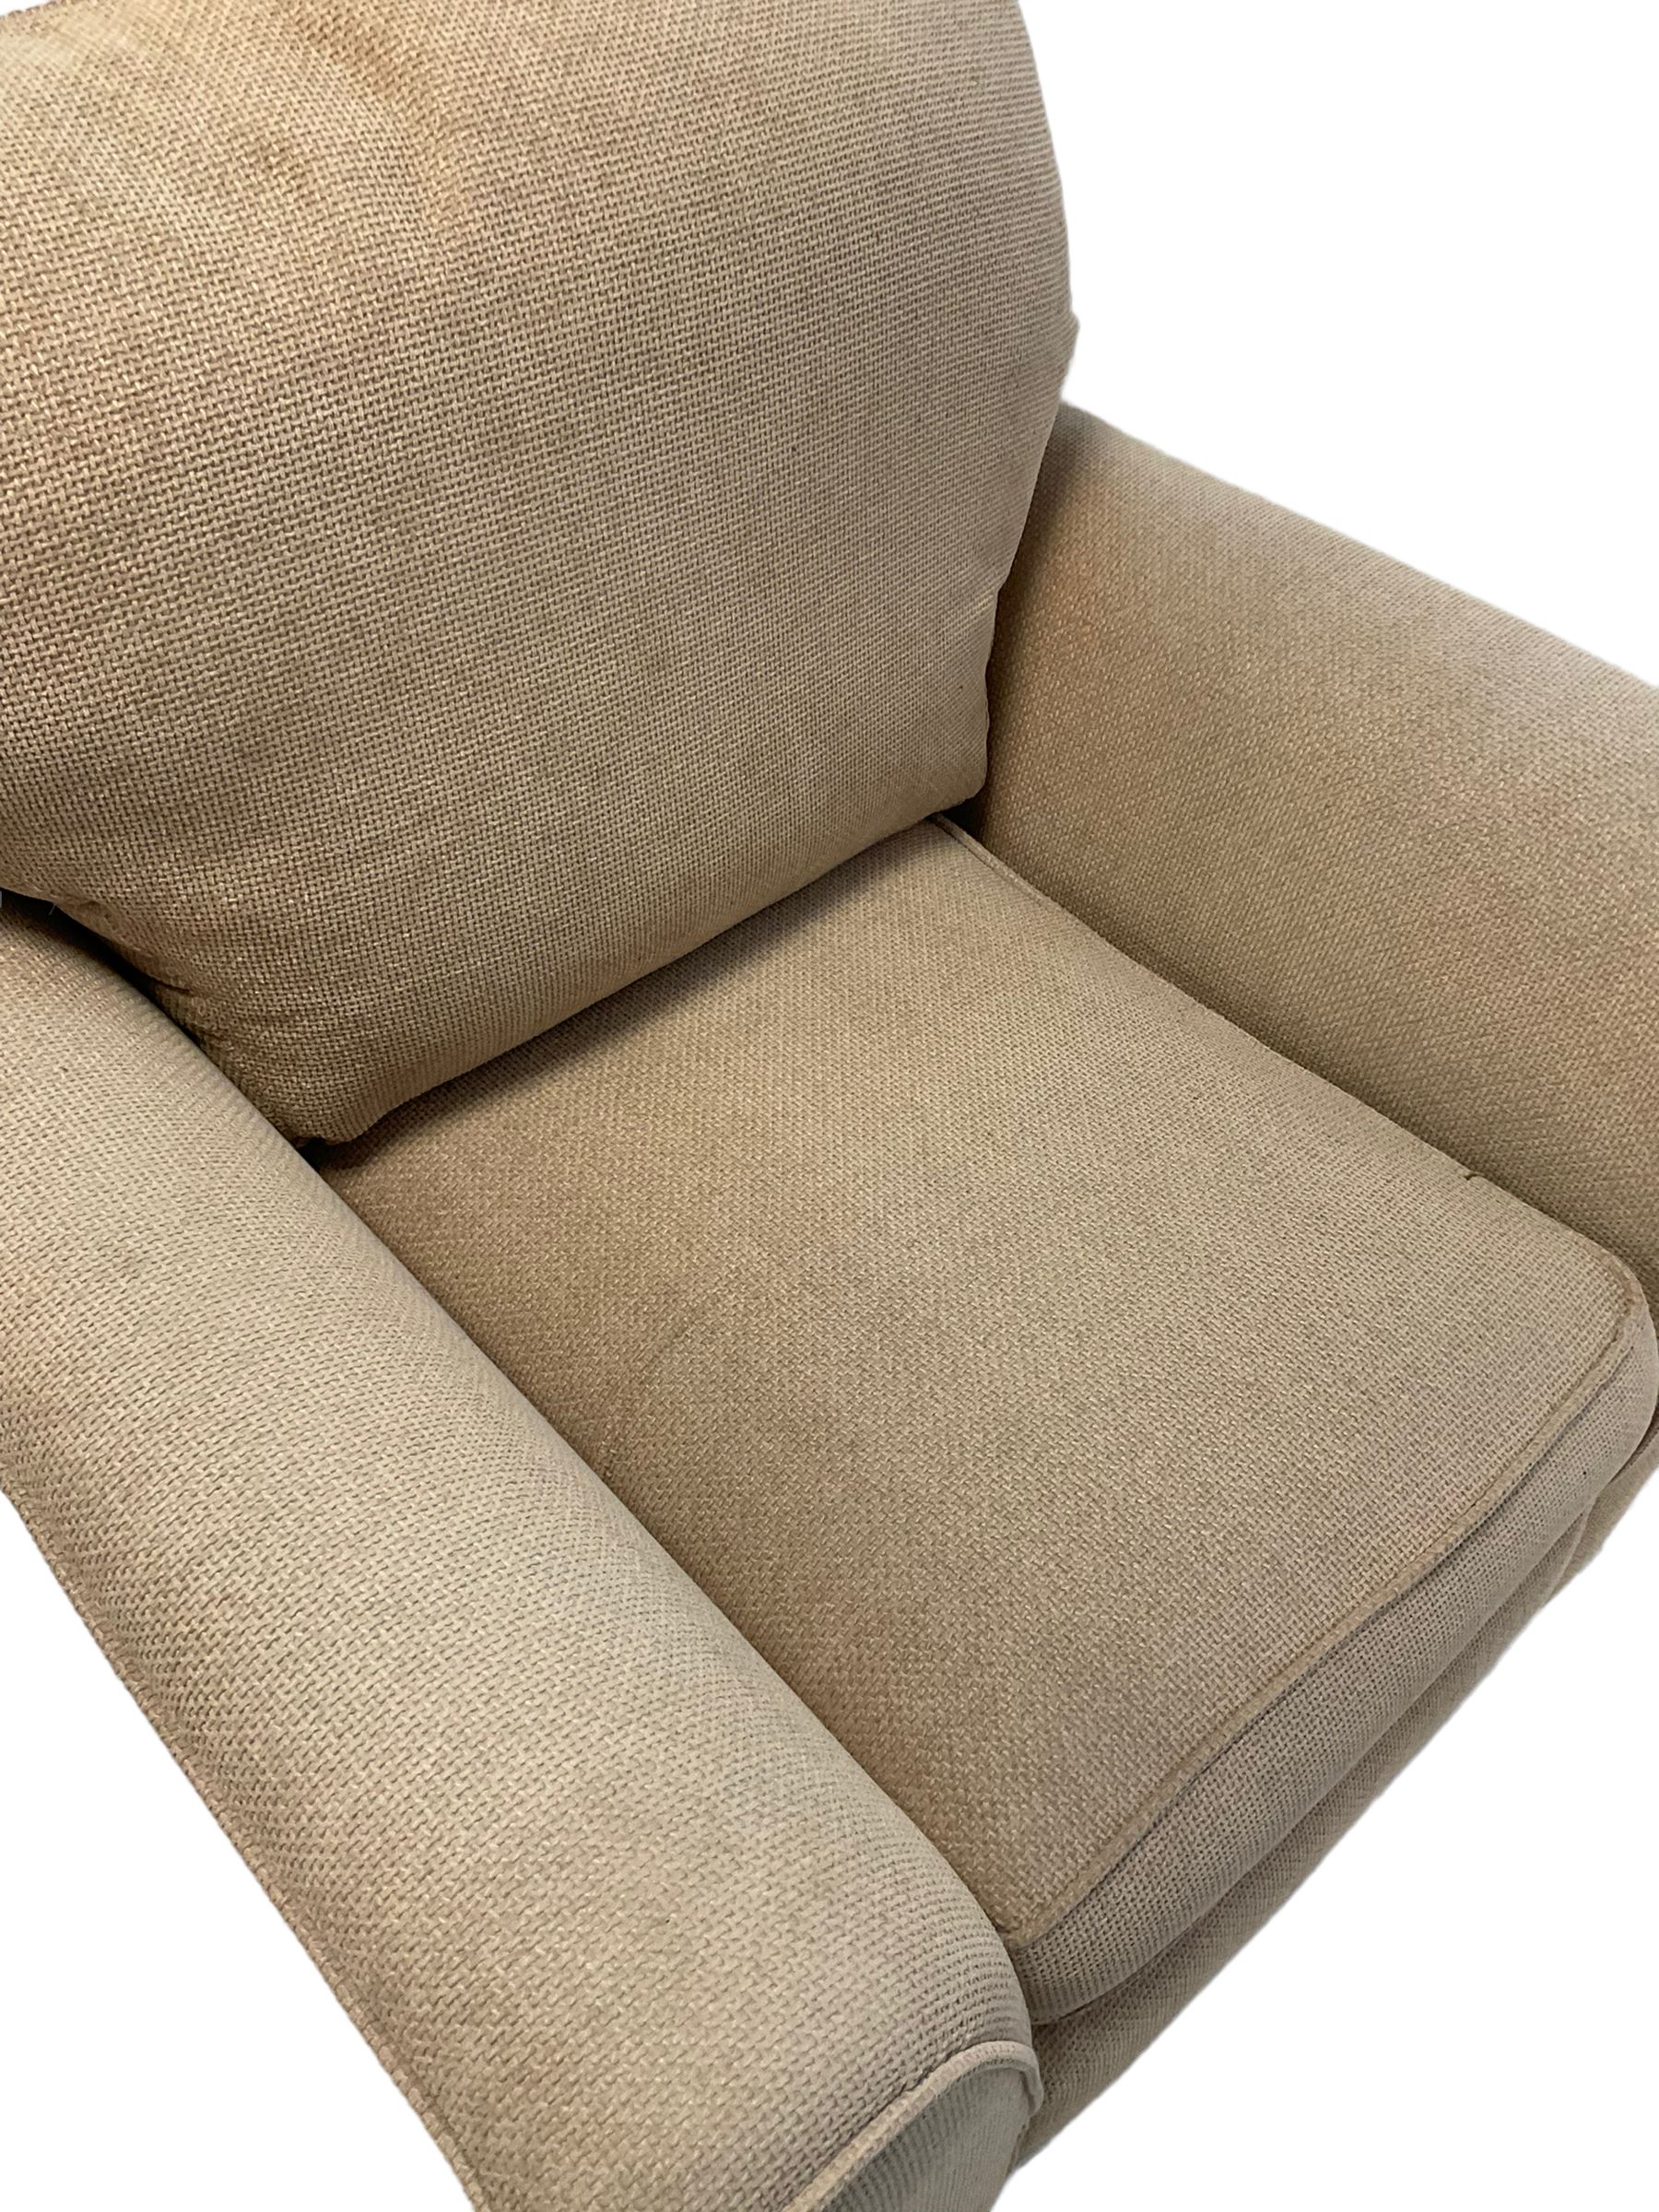 Armchair upholstered in beige fabric - Bild 2 aus 3